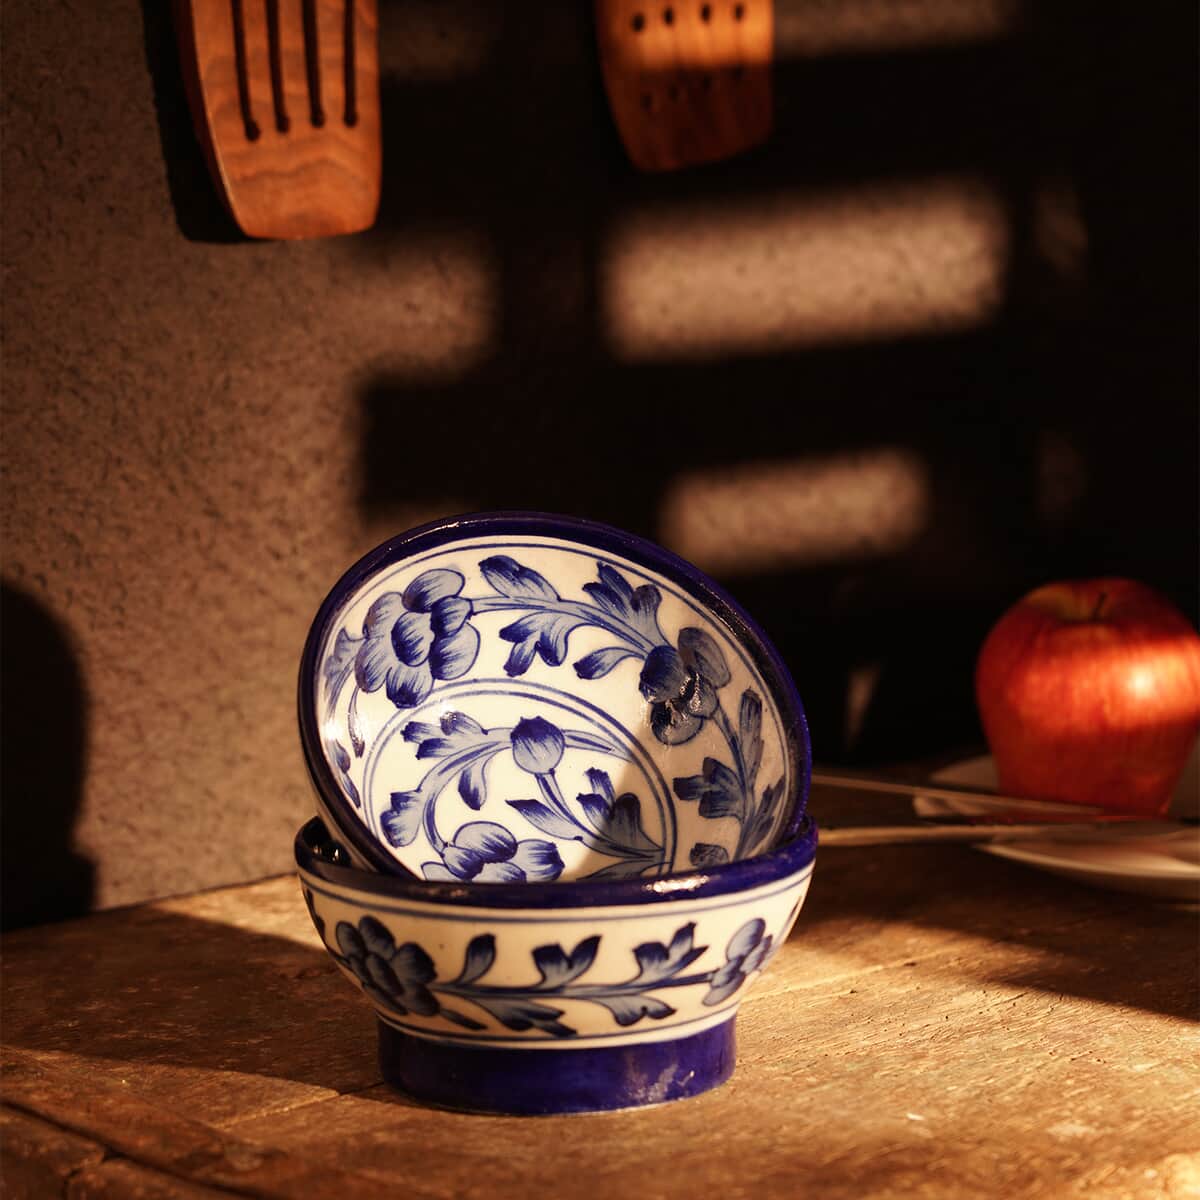 Blue Art Pottery Handmade Blue Floral and Leaf Pattern Crafted Ceramic Bowl - Set of 2 image number 1